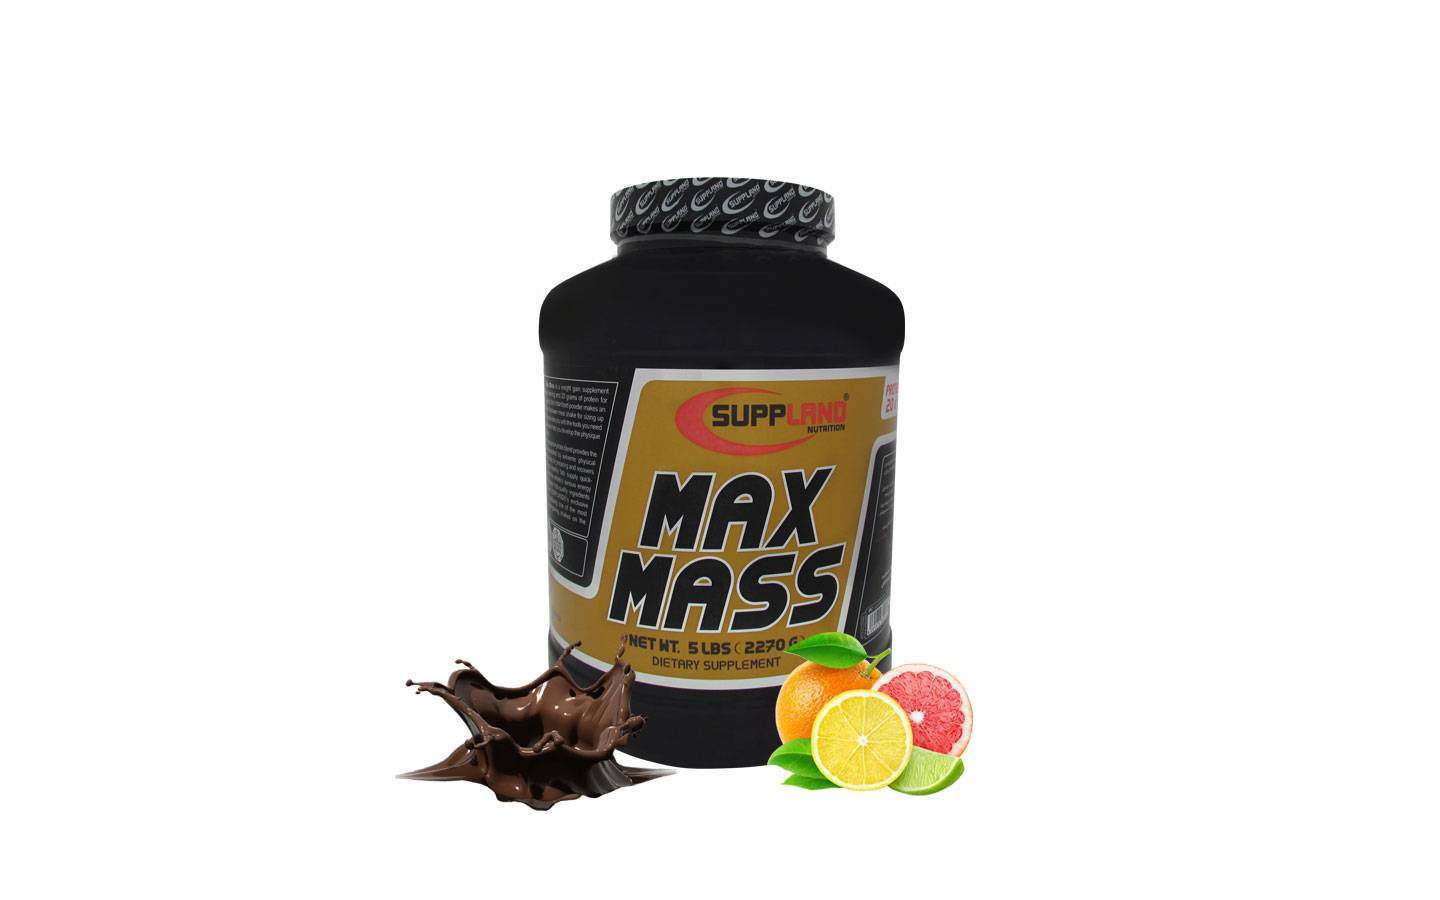 پودر مکس مس ساپلند نوتریشن با طعم شکلات 2270 گرمی Suppland Nutrition Max Mass Powder 2270 gr (کپی)